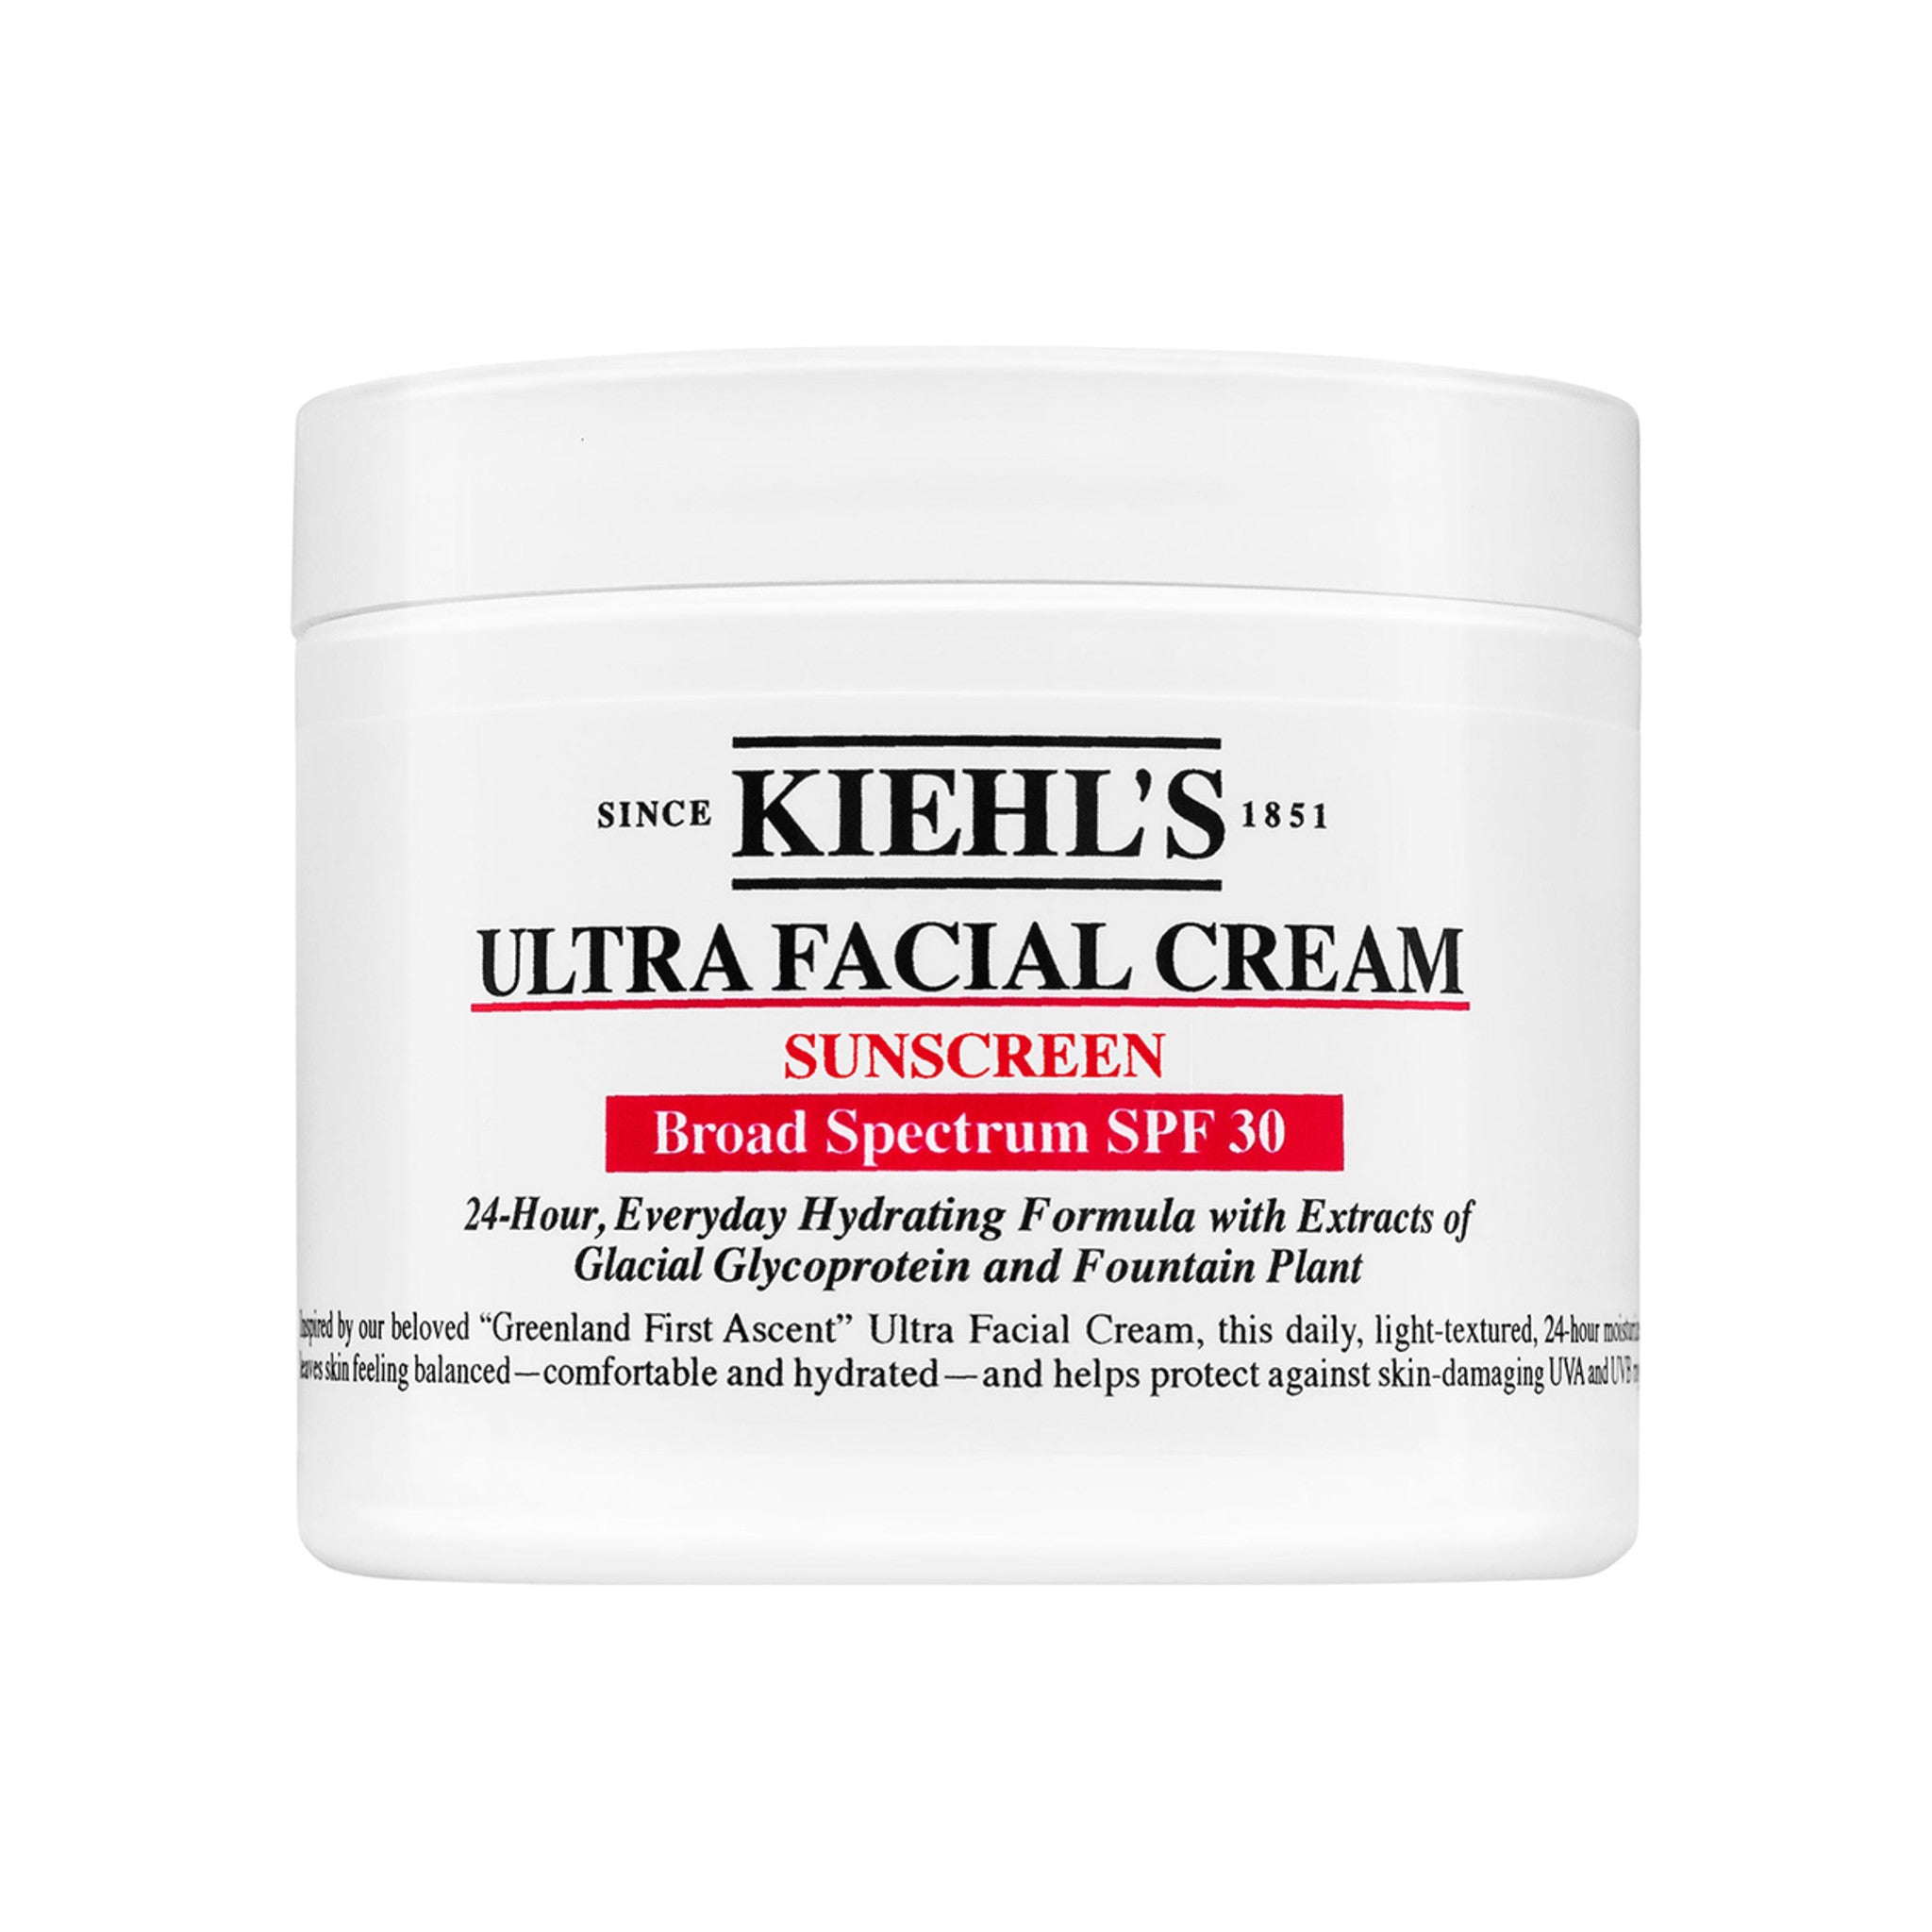 Kiehl's Since 1851 Ultra Facial Cream SPF 30 Size variant: 125 ml main image.